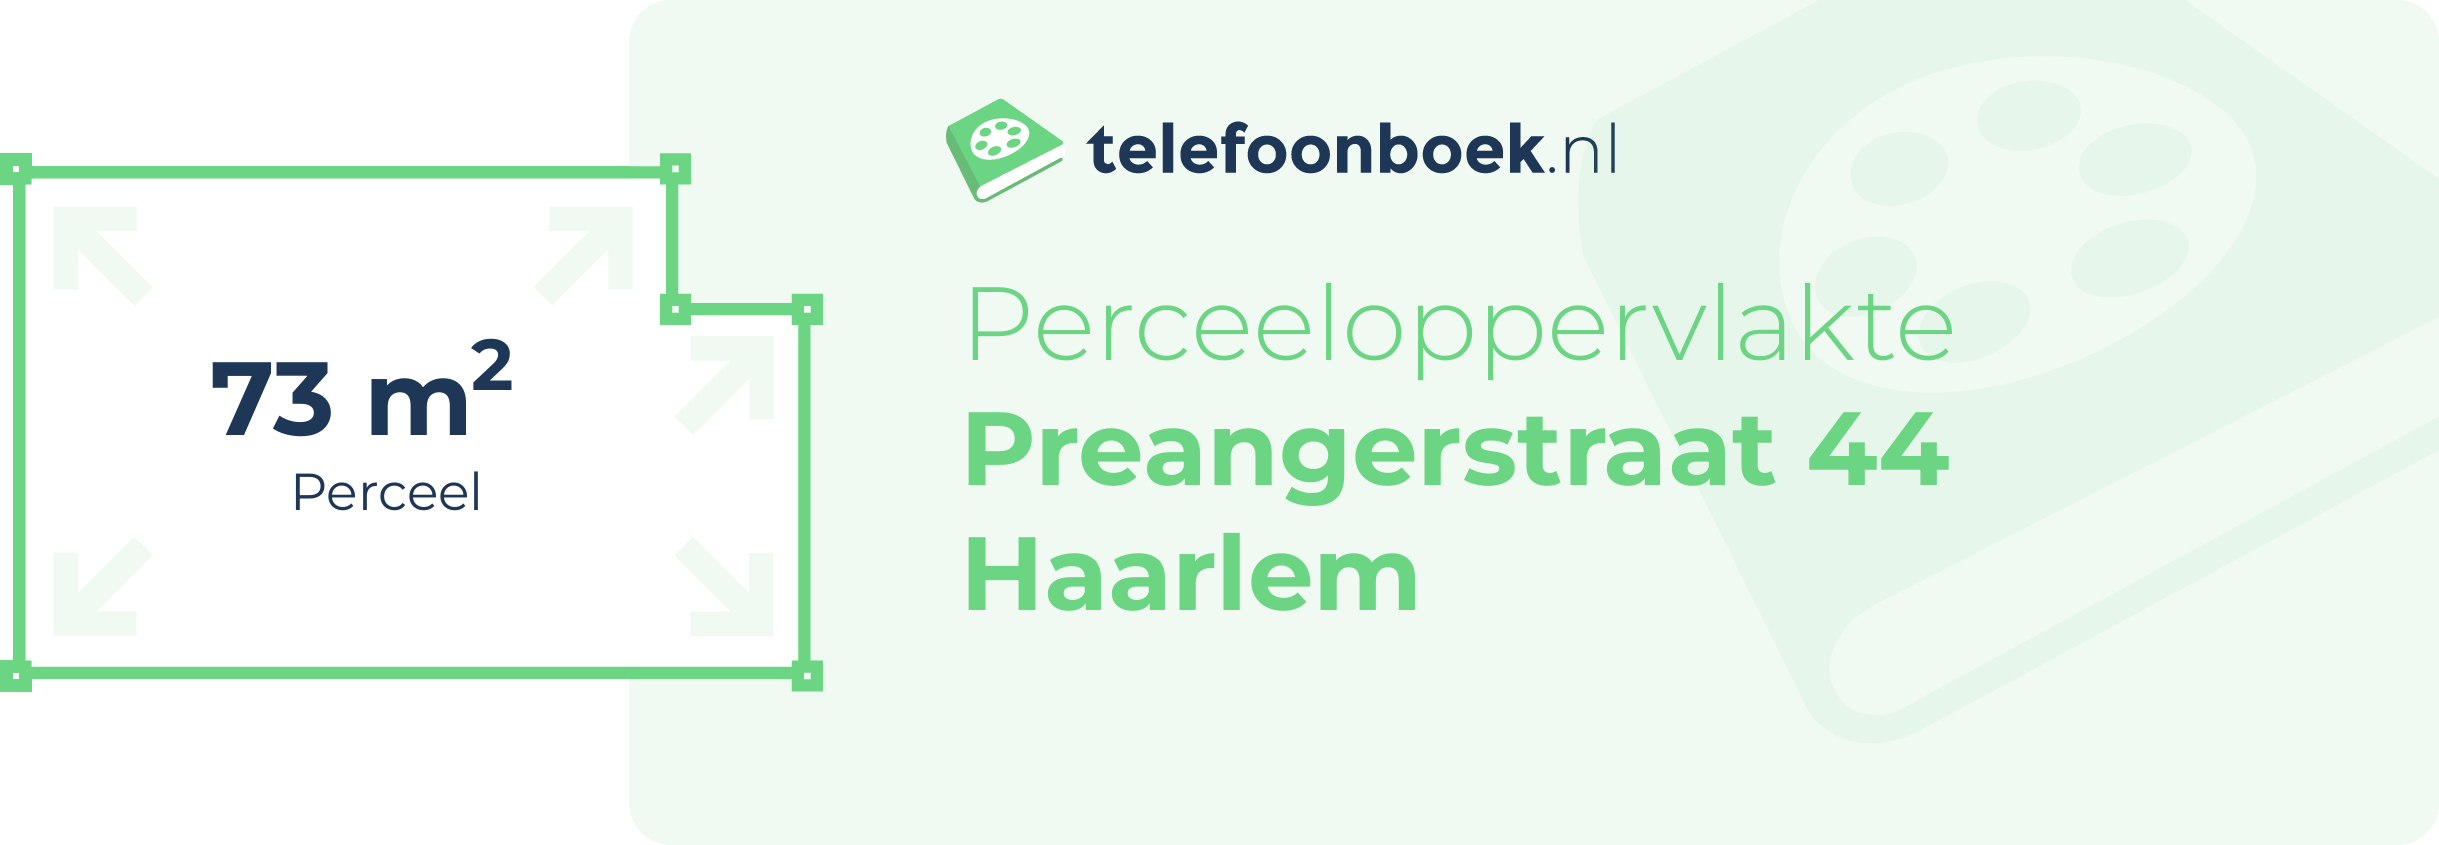 Perceeloppervlakte Preangerstraat 44 Haarlem